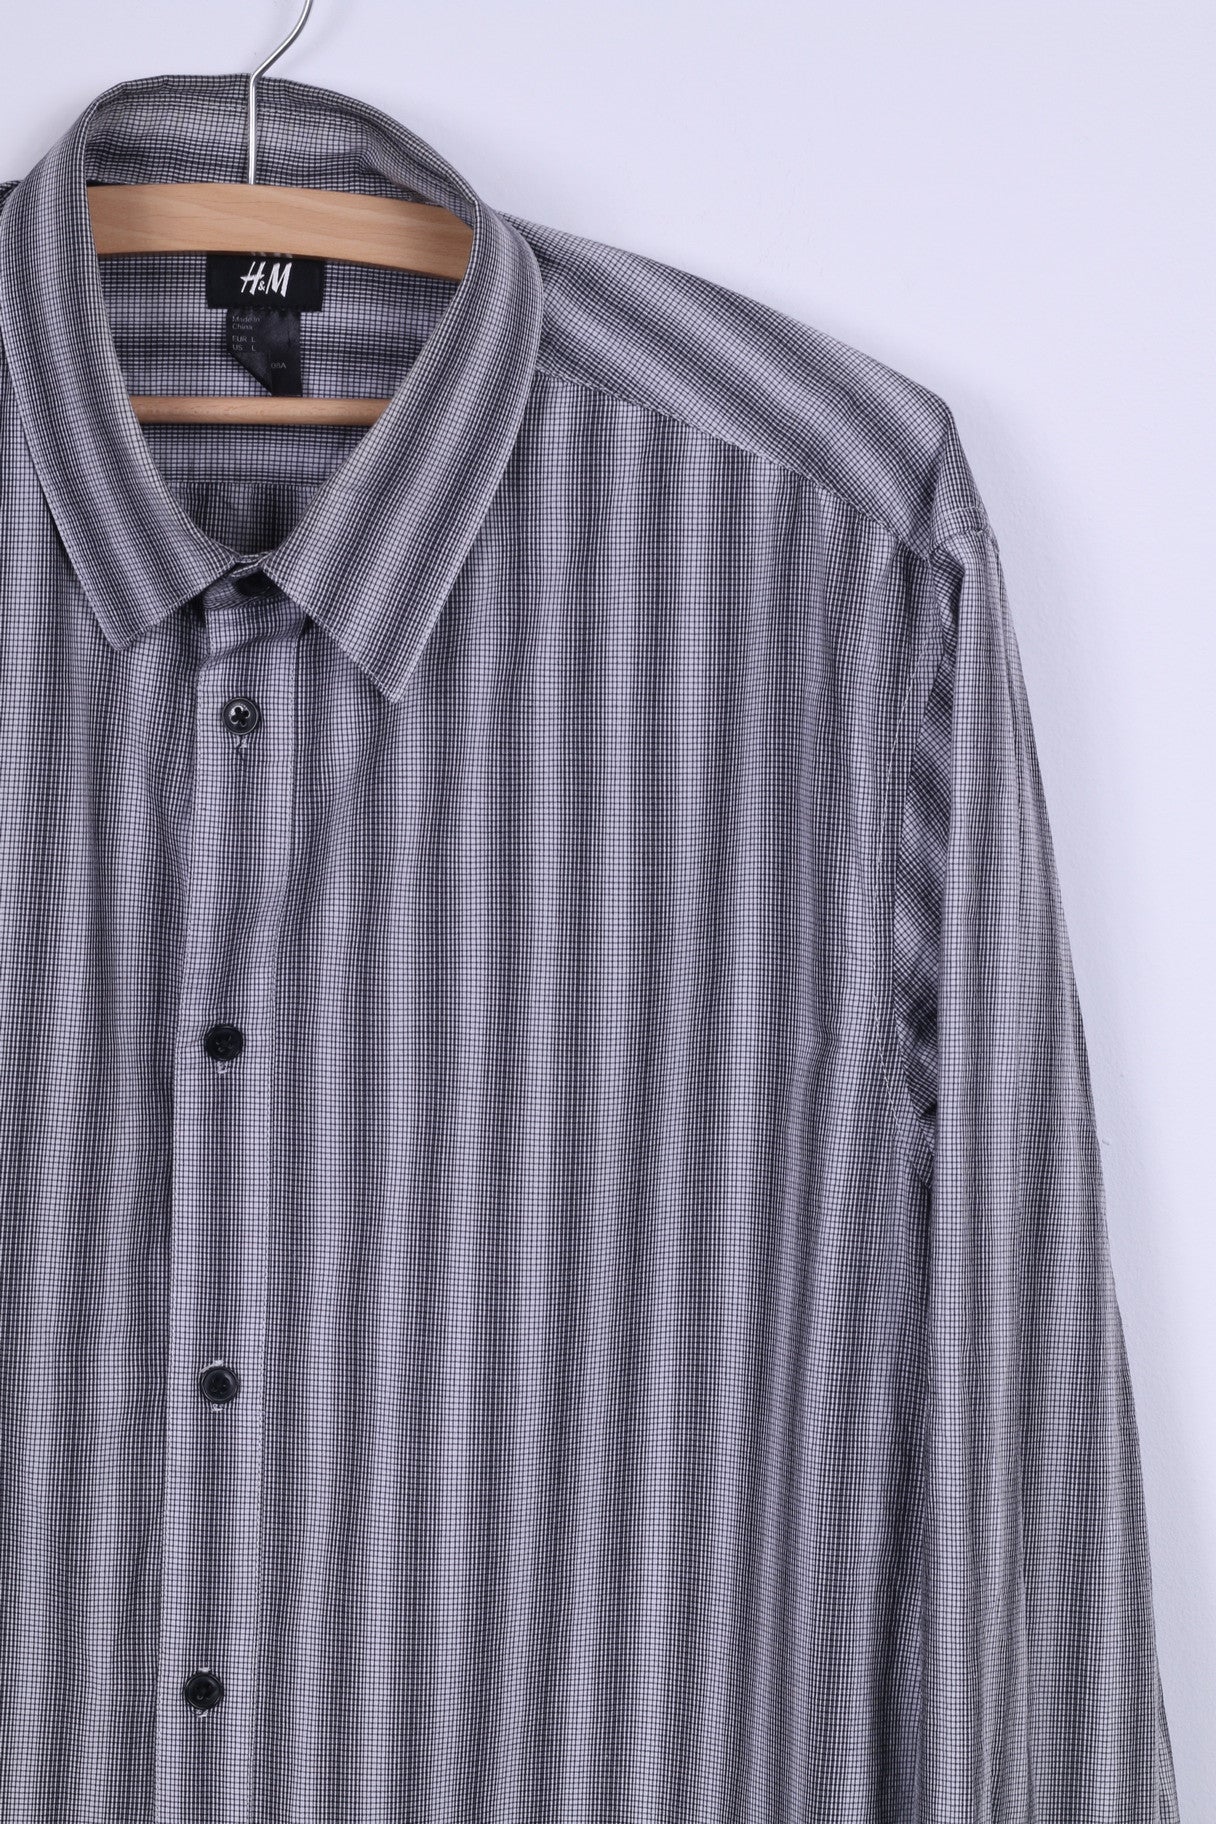 H&M Mens L (M) Casual Shirt Black White Striped Cotton Long Sleeve